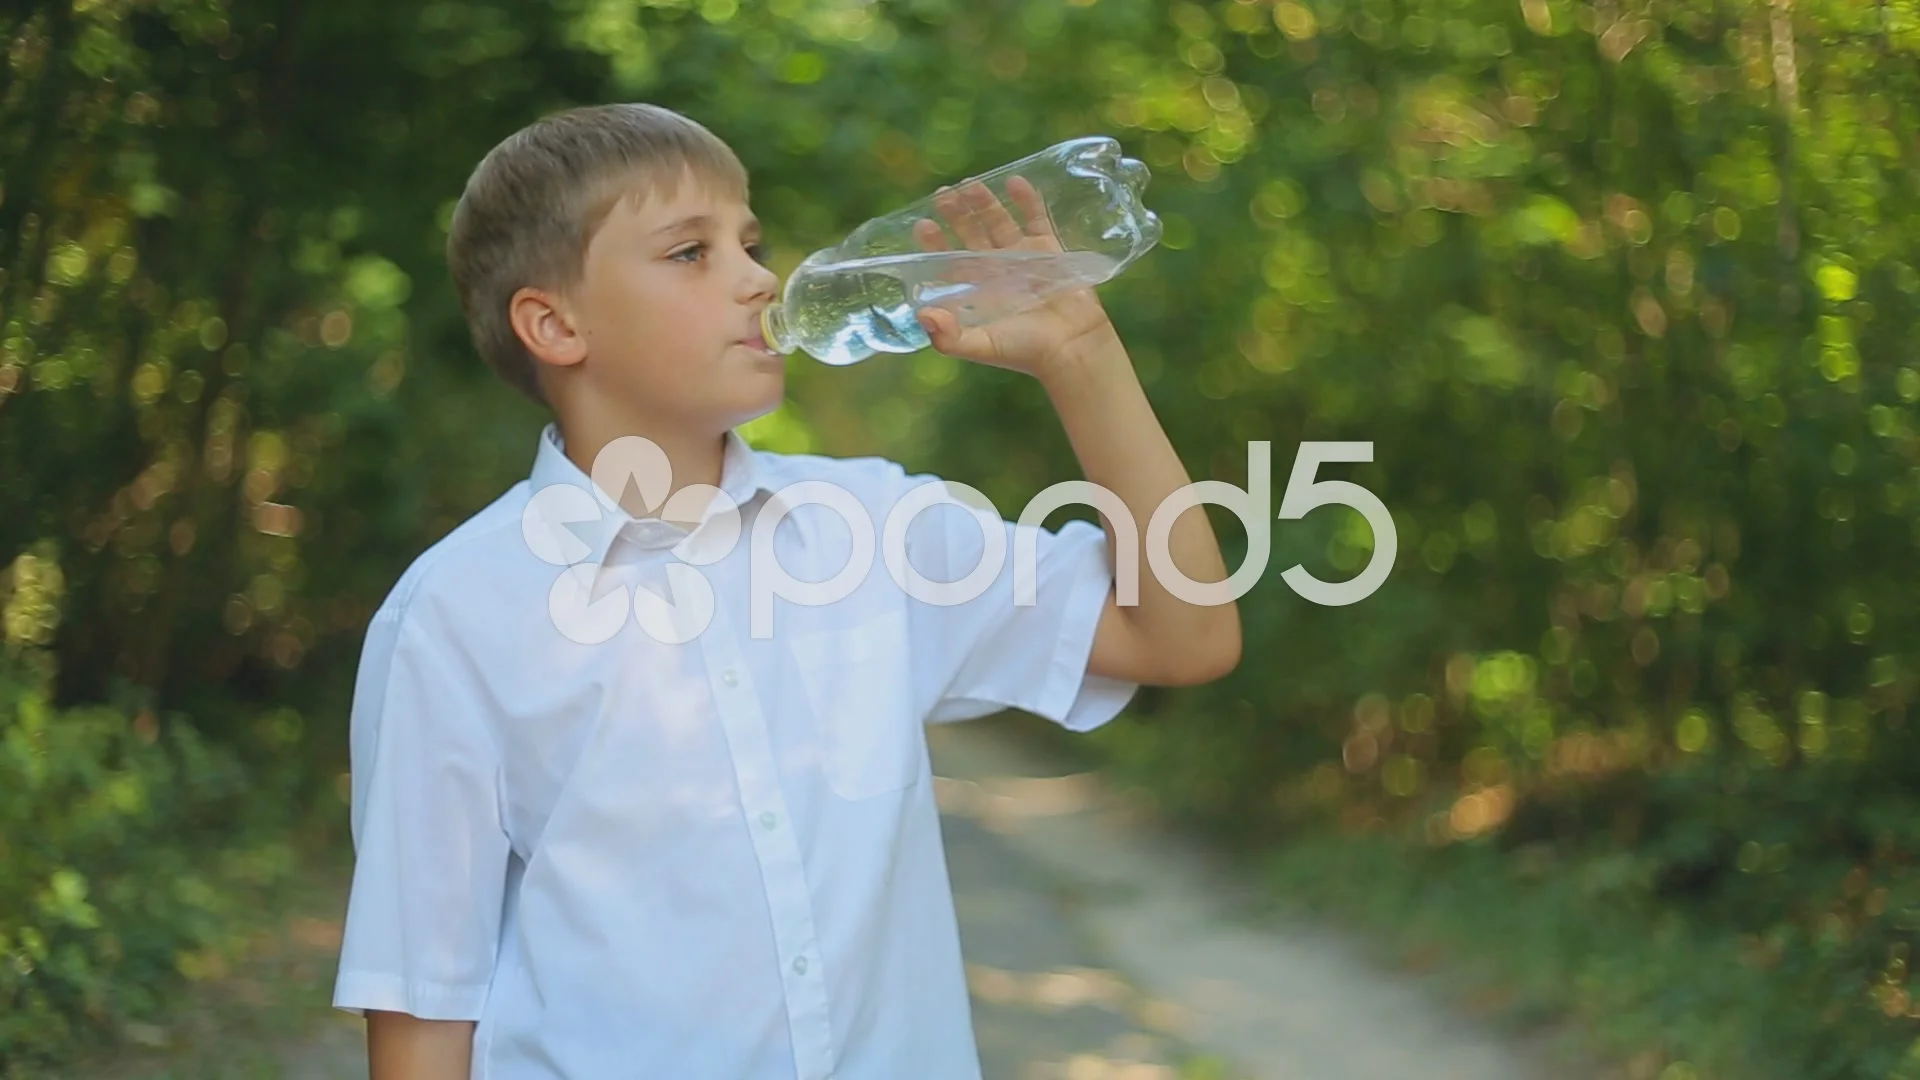 https://images.pond5.com/teen-boy-drinks-water-bottle-footage-043851549_prevstill.jpeg